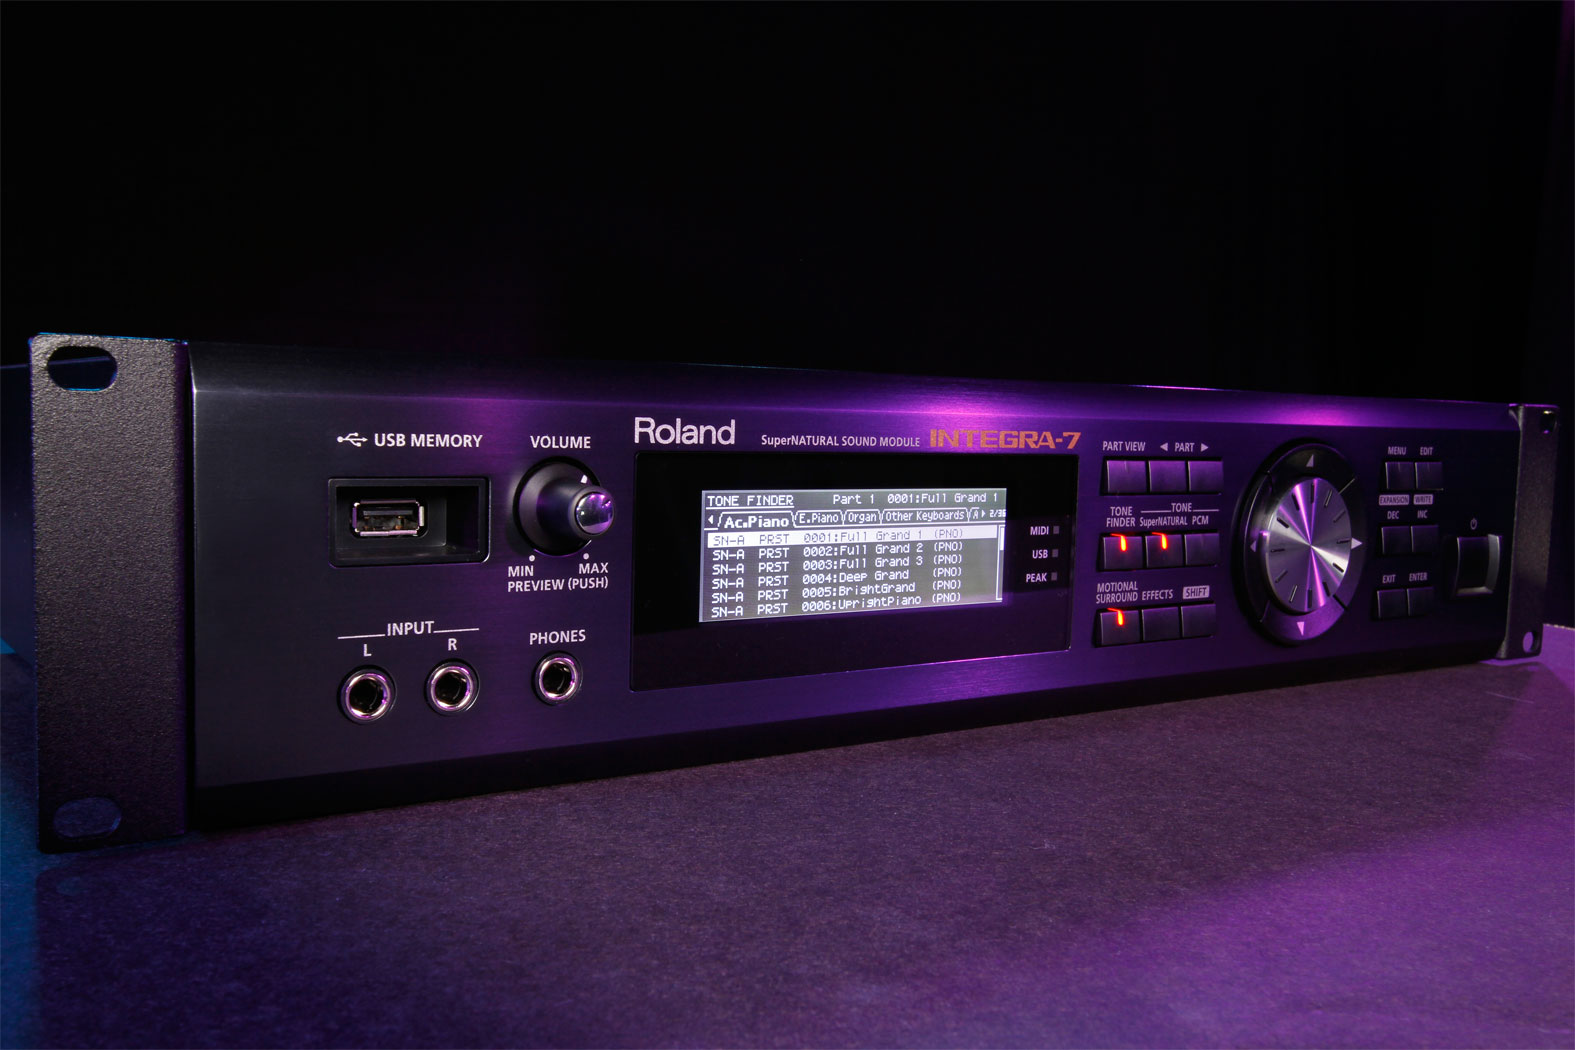 Roland - INTEGRA-7 | SuperNATURAL Sound Module